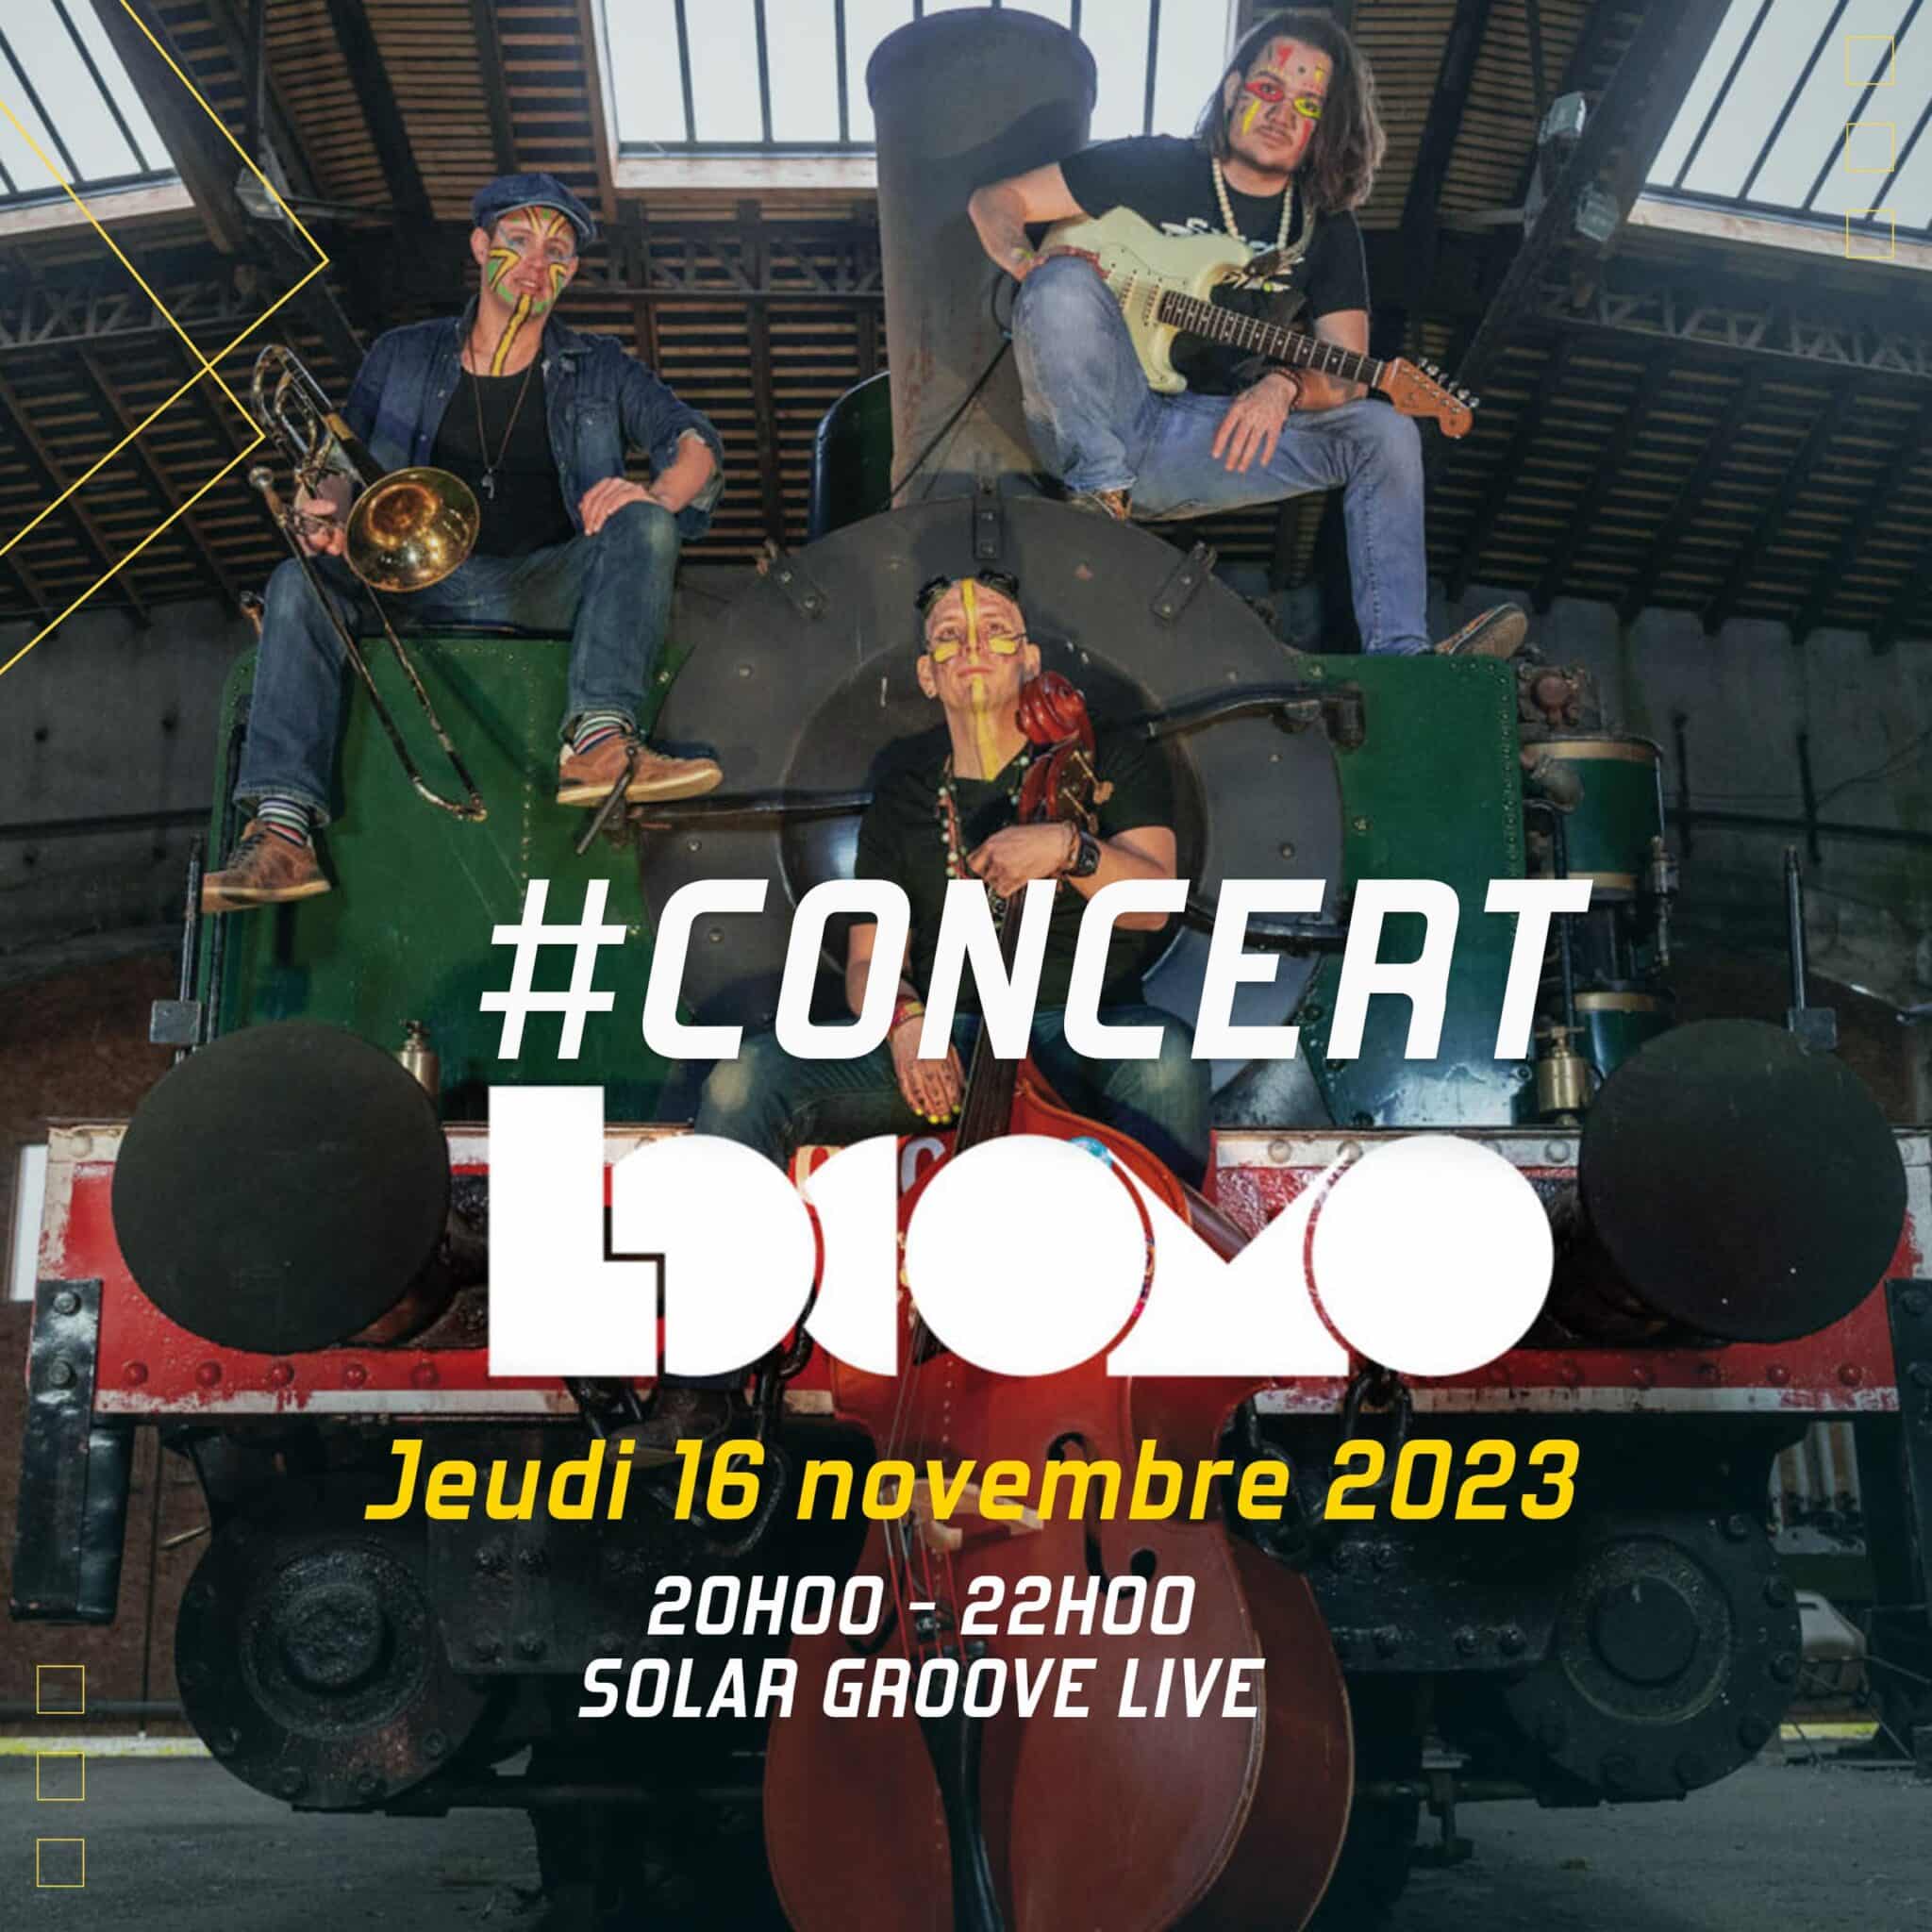 Concert de Locomo jeudi 16 novembre à Vertical'Art Le Mans